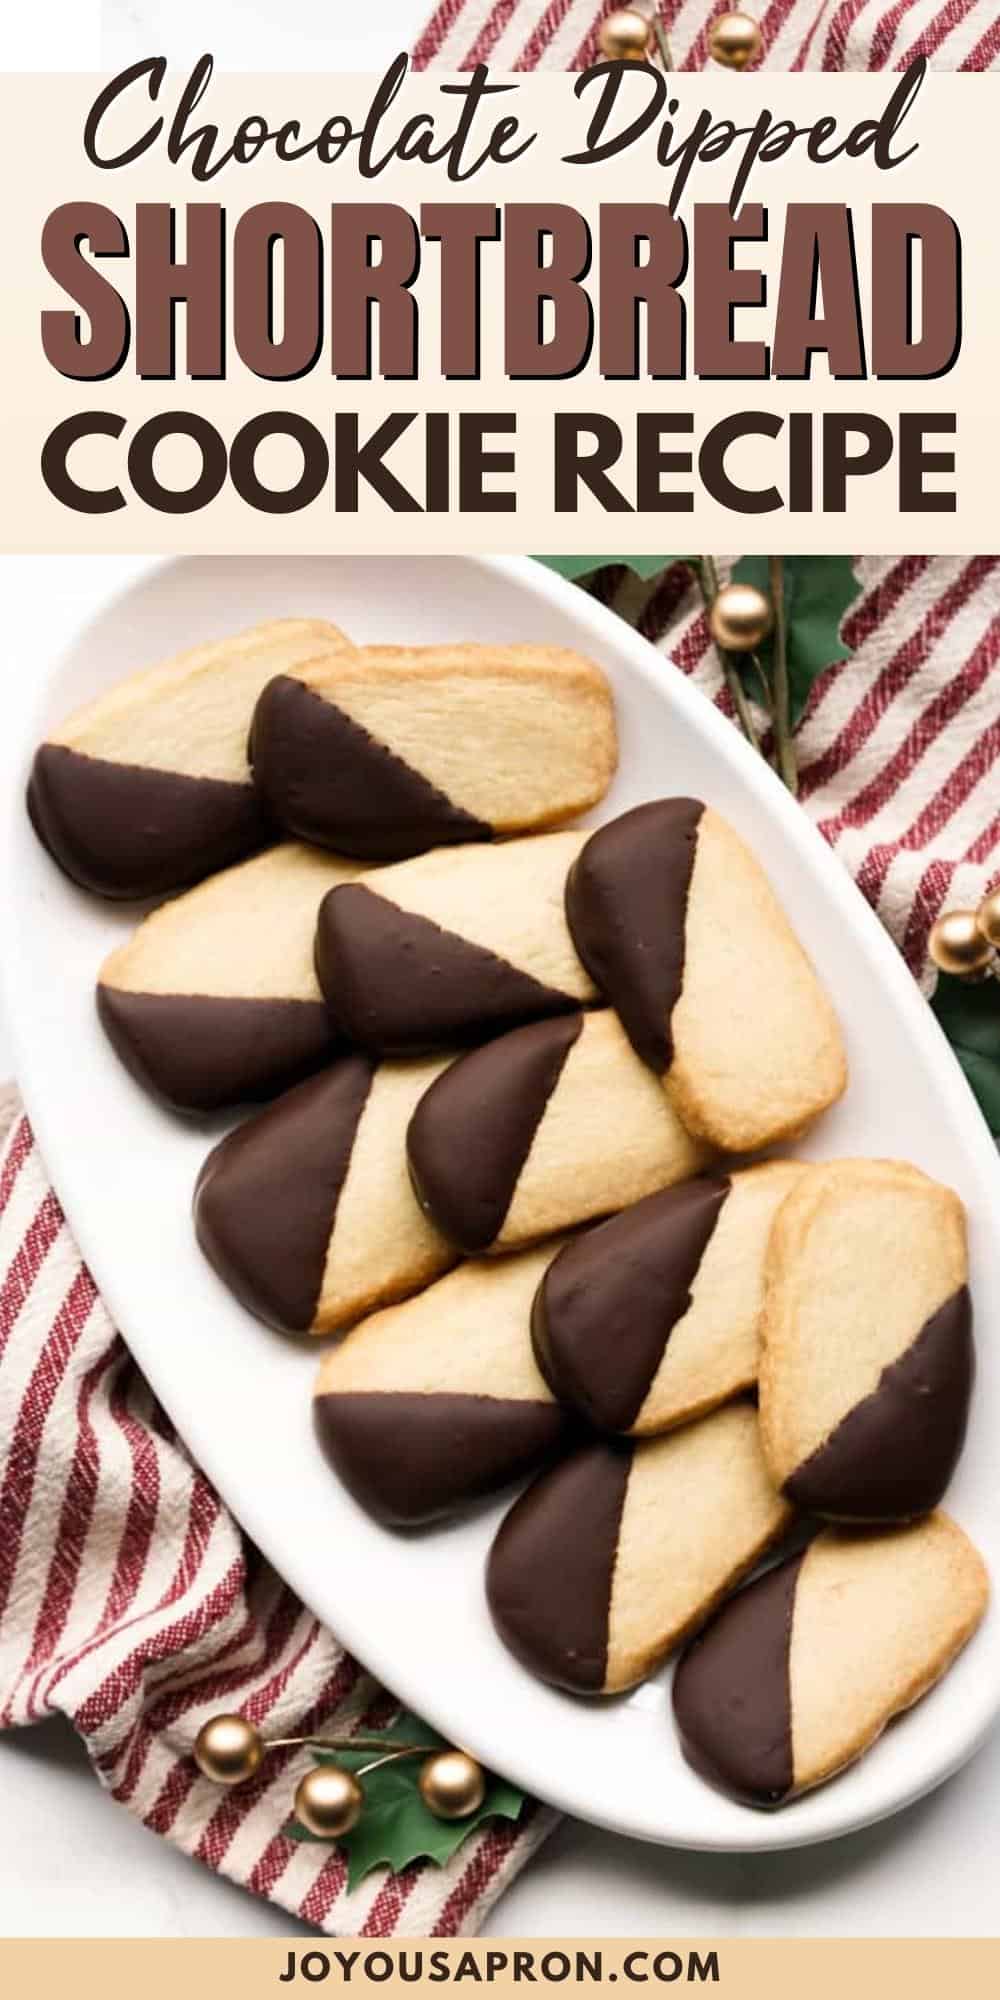 Chocolate Dipped Shortbread Cookies via @joyousapron